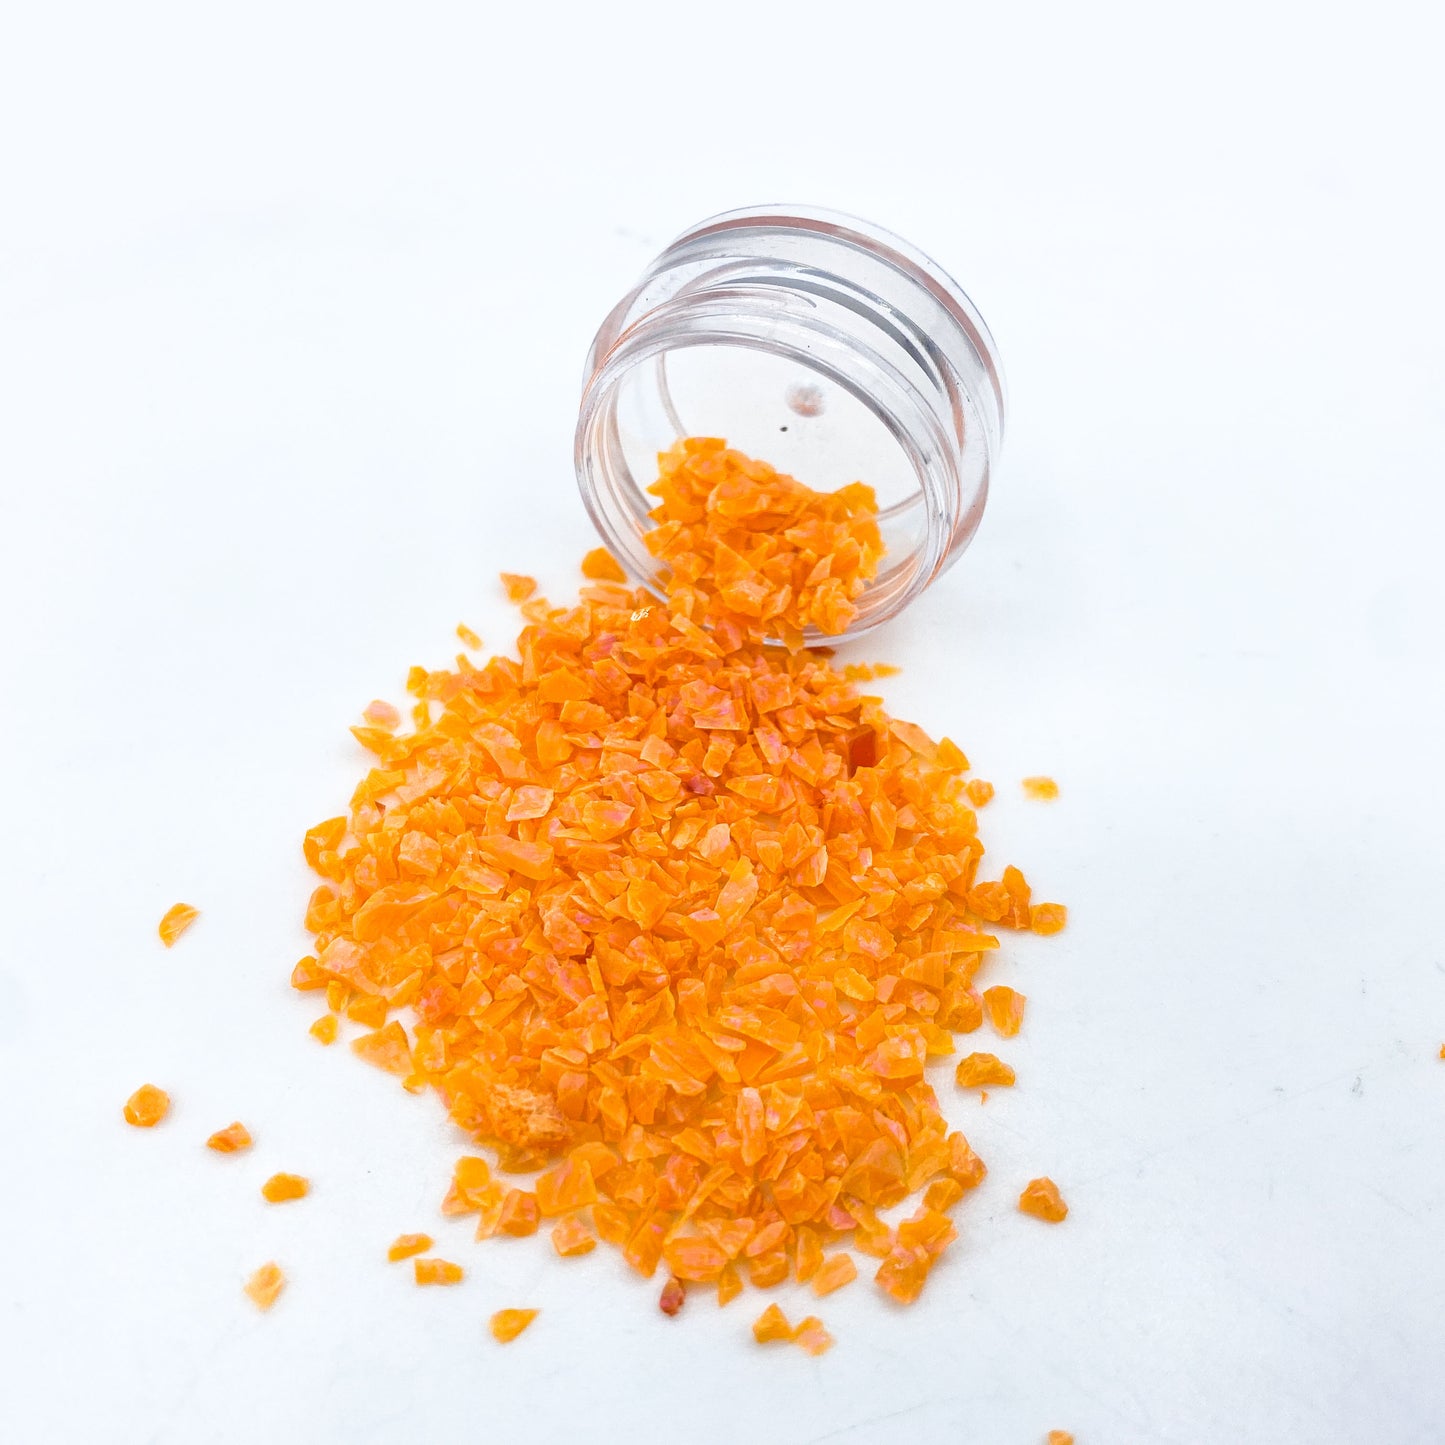 Opal - Orange Crush - Patrick Adair Supplies